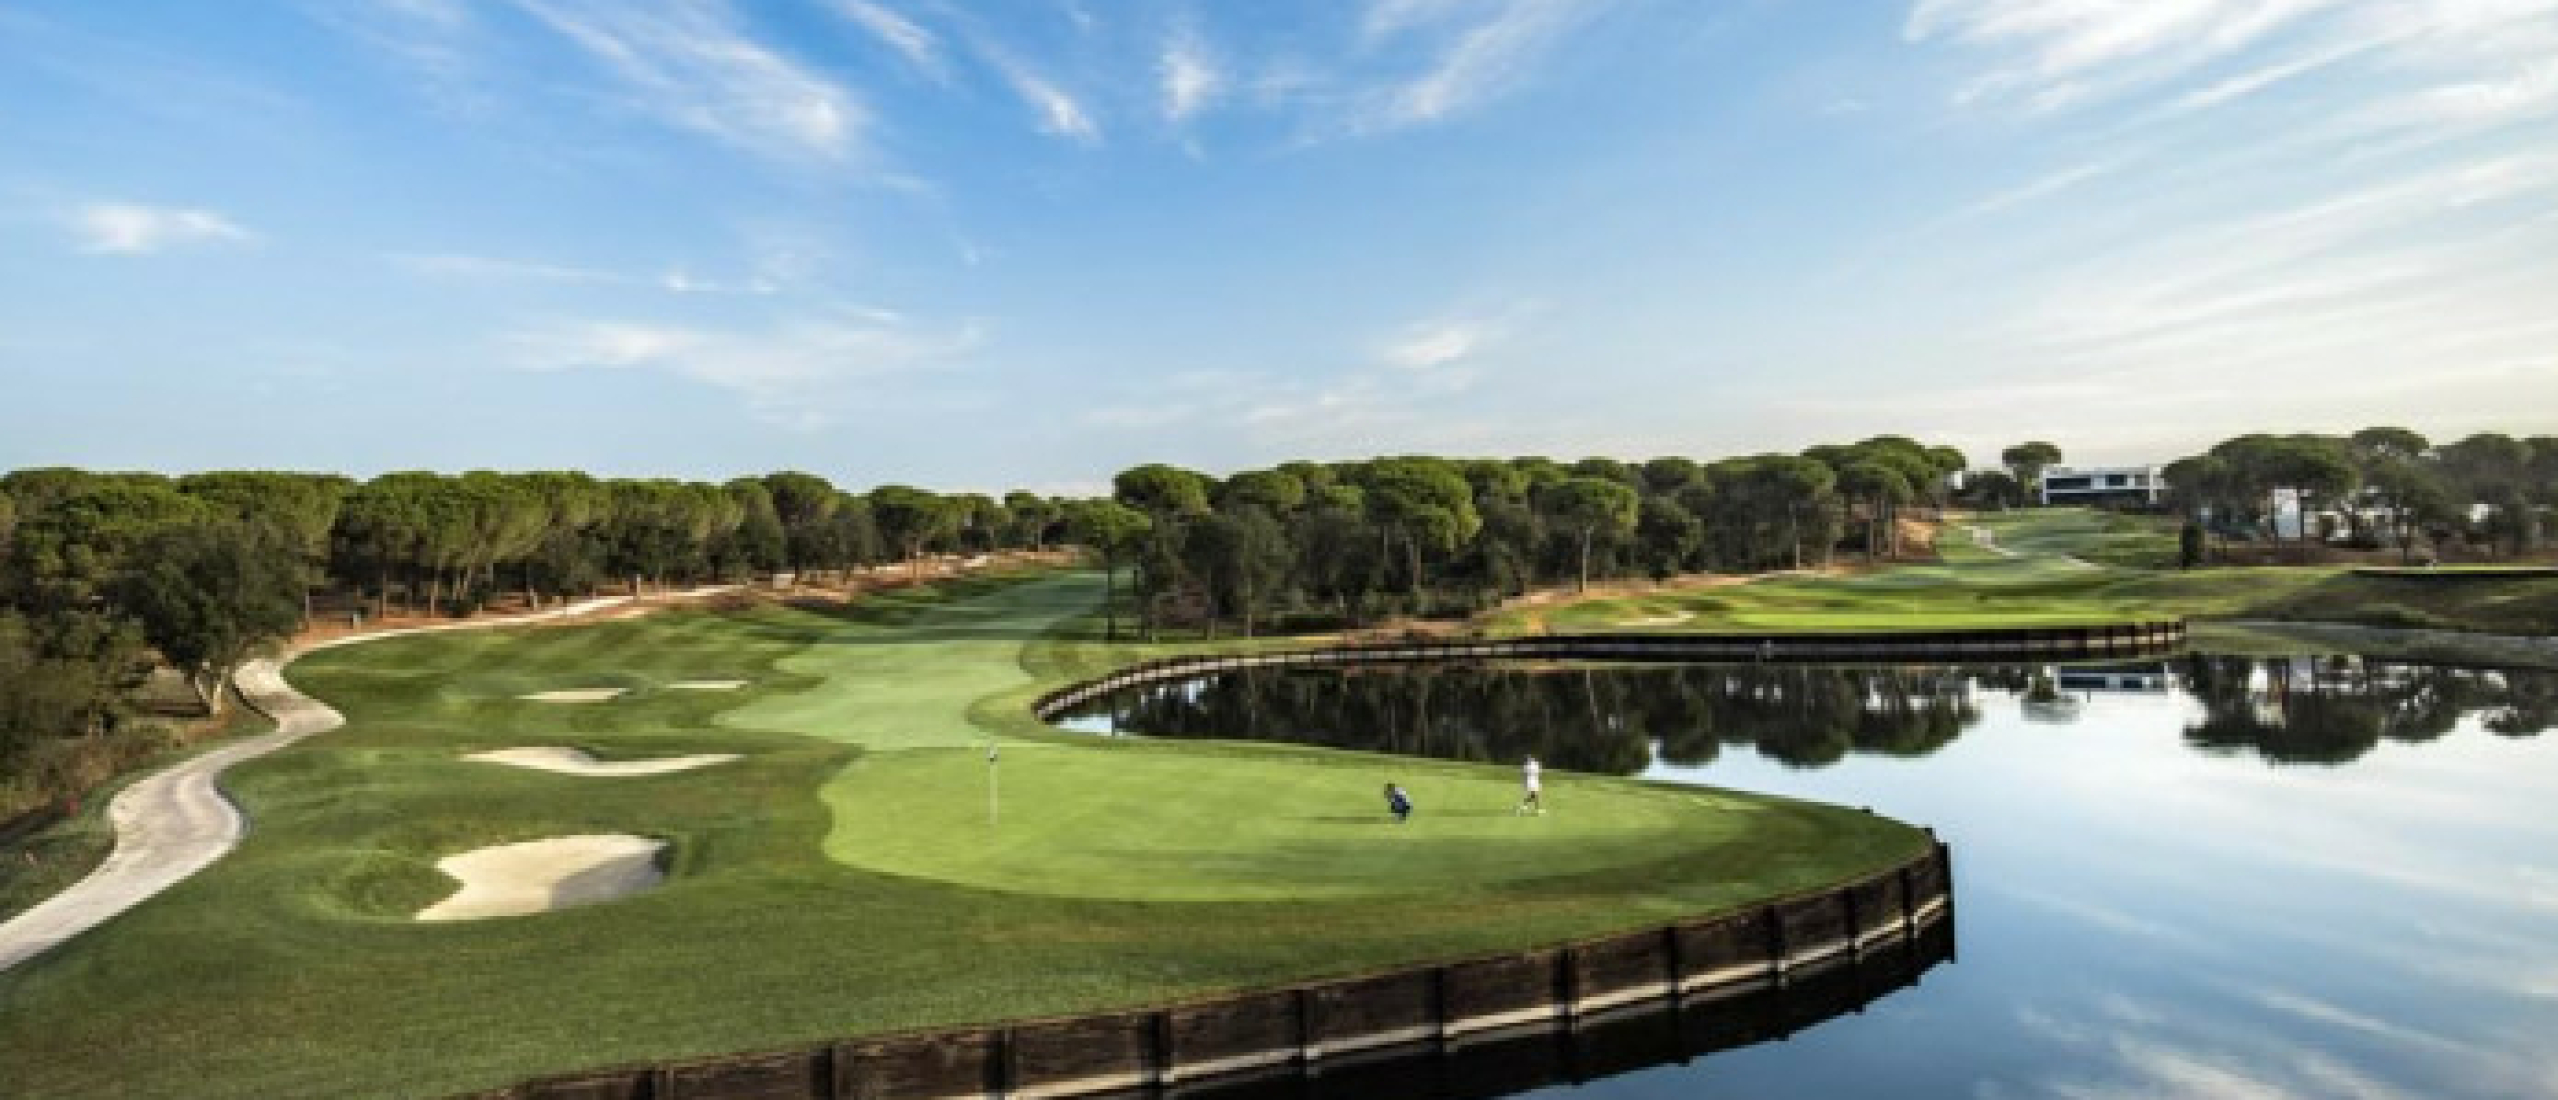 The Empordà and Costa Brava: a golfer's paradise